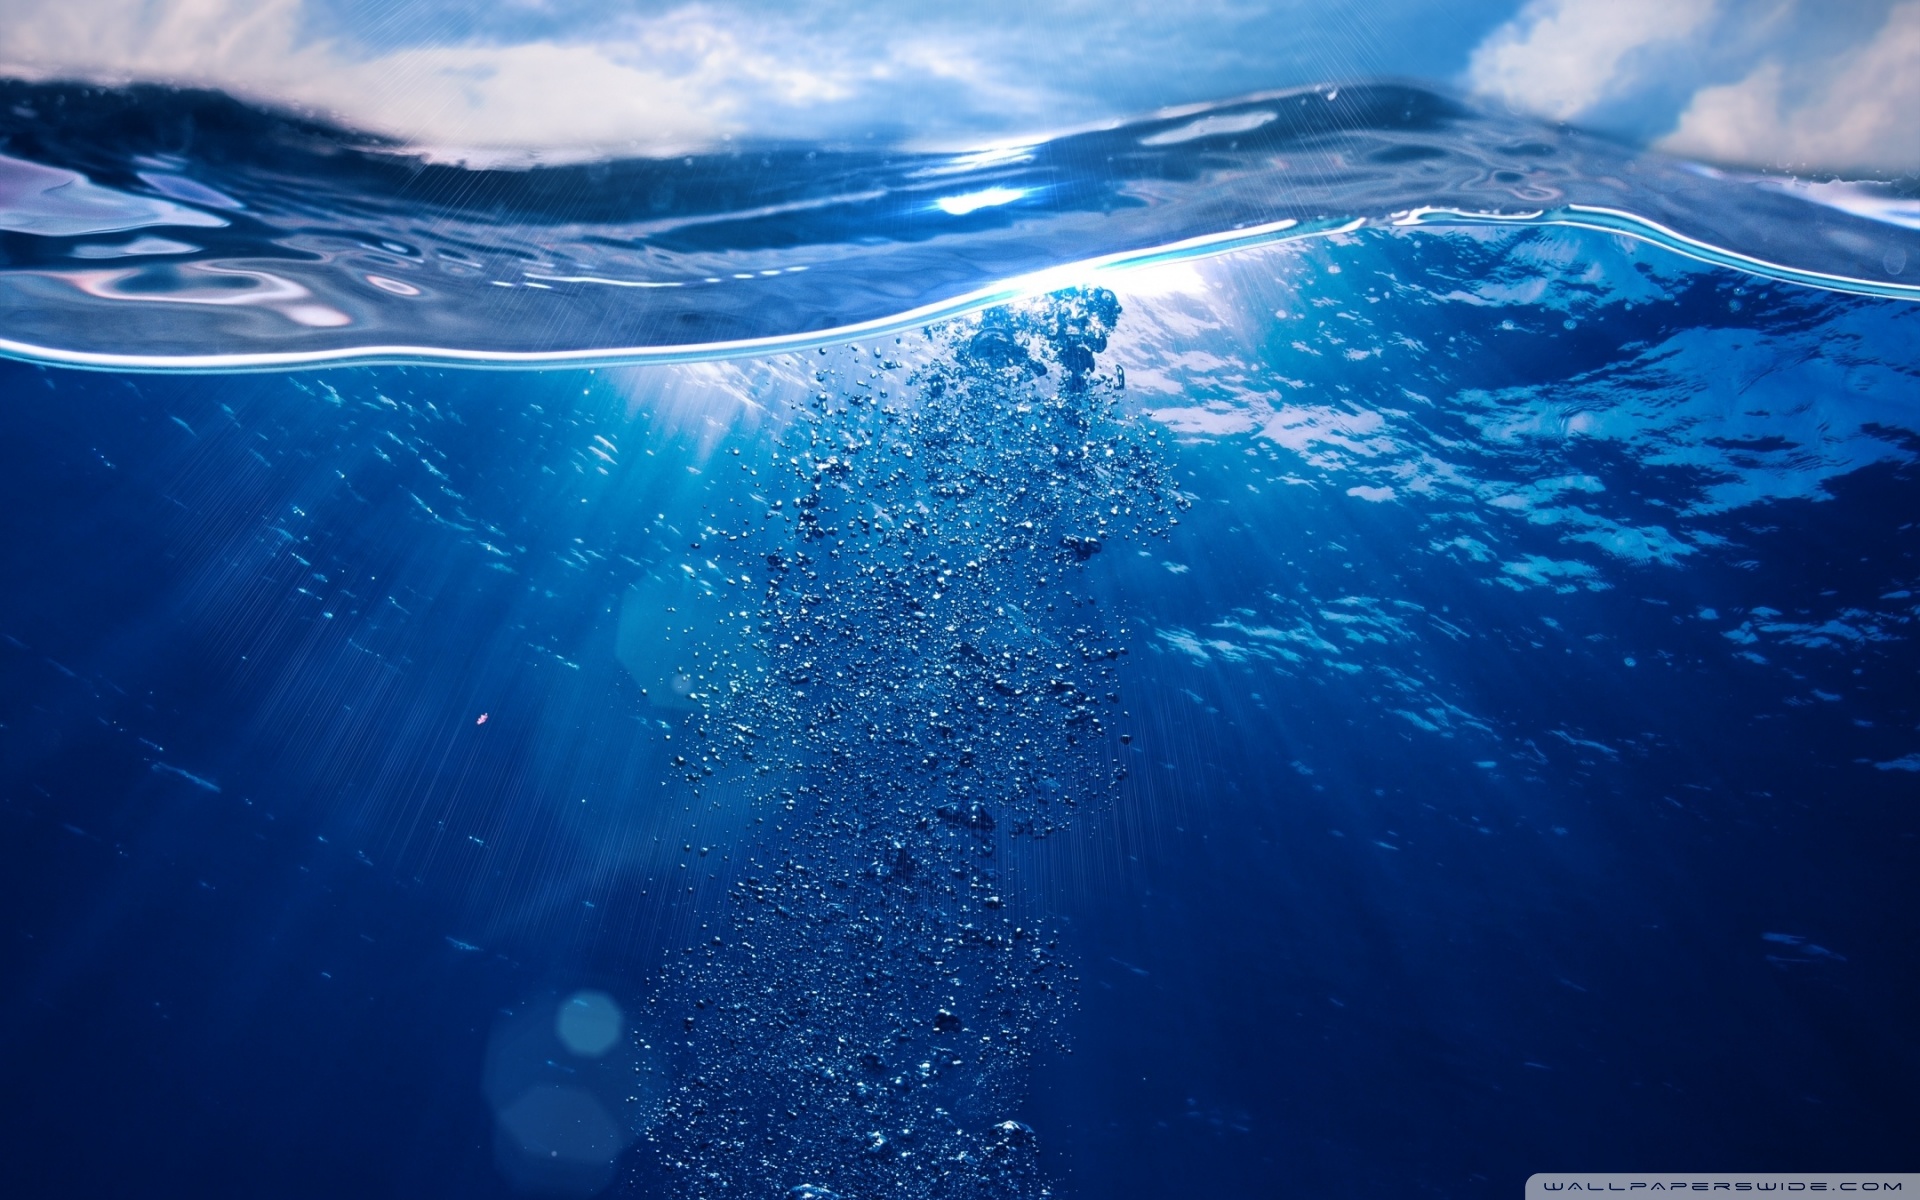 water wallpaper download,water,blue,sky,ocean,underwater